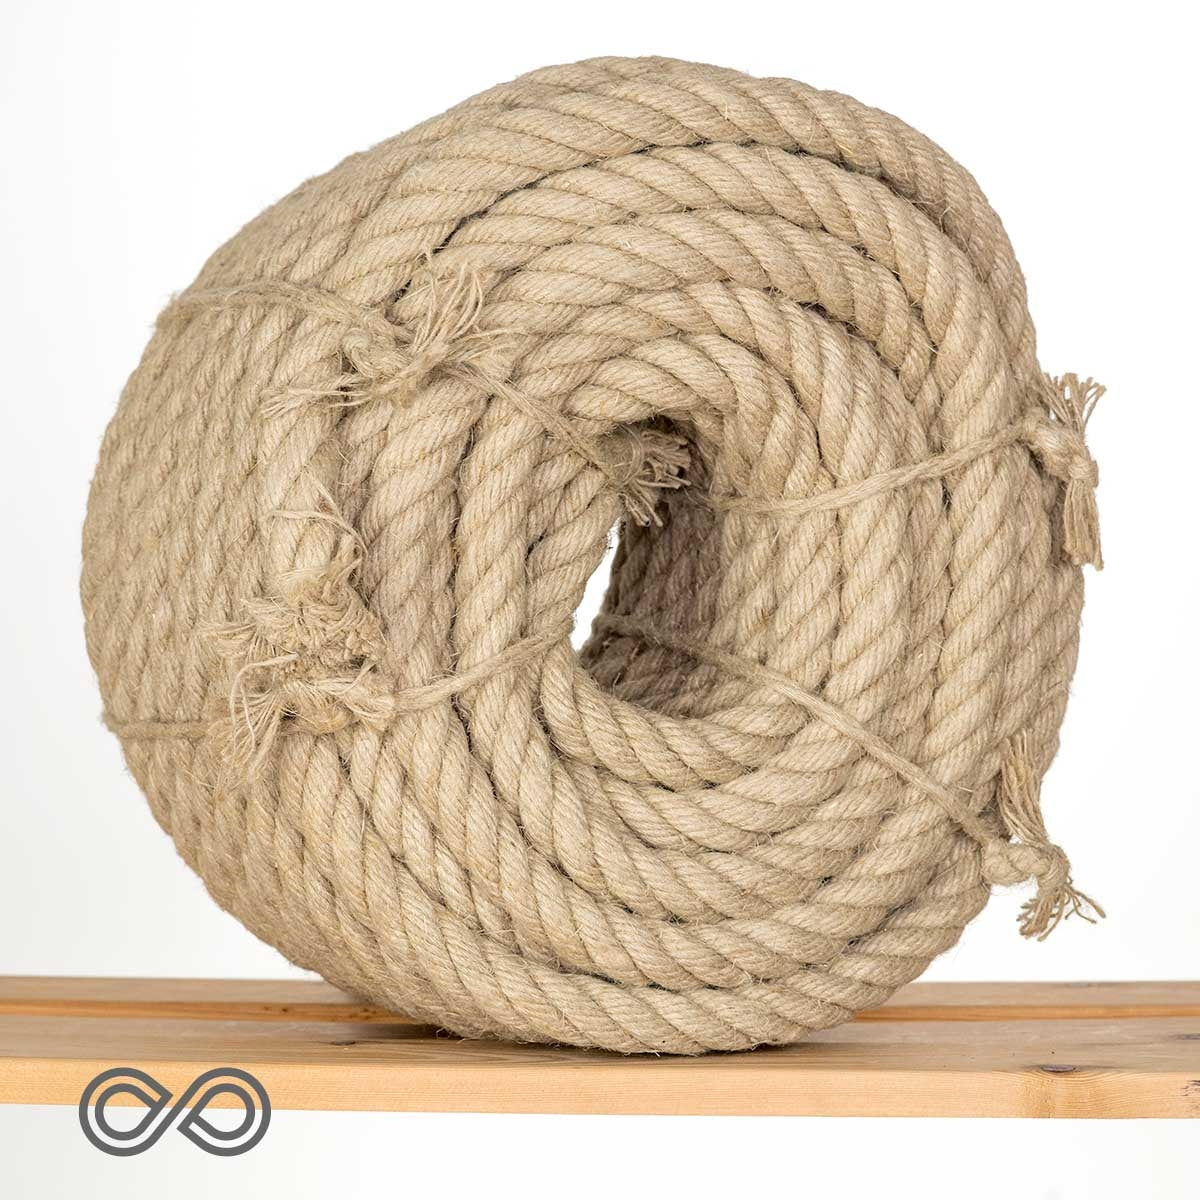 Organic Hemp Rope ¼ 6mm. Skin-friendly. Sweatshop-free made in Europe. –  Rawganique